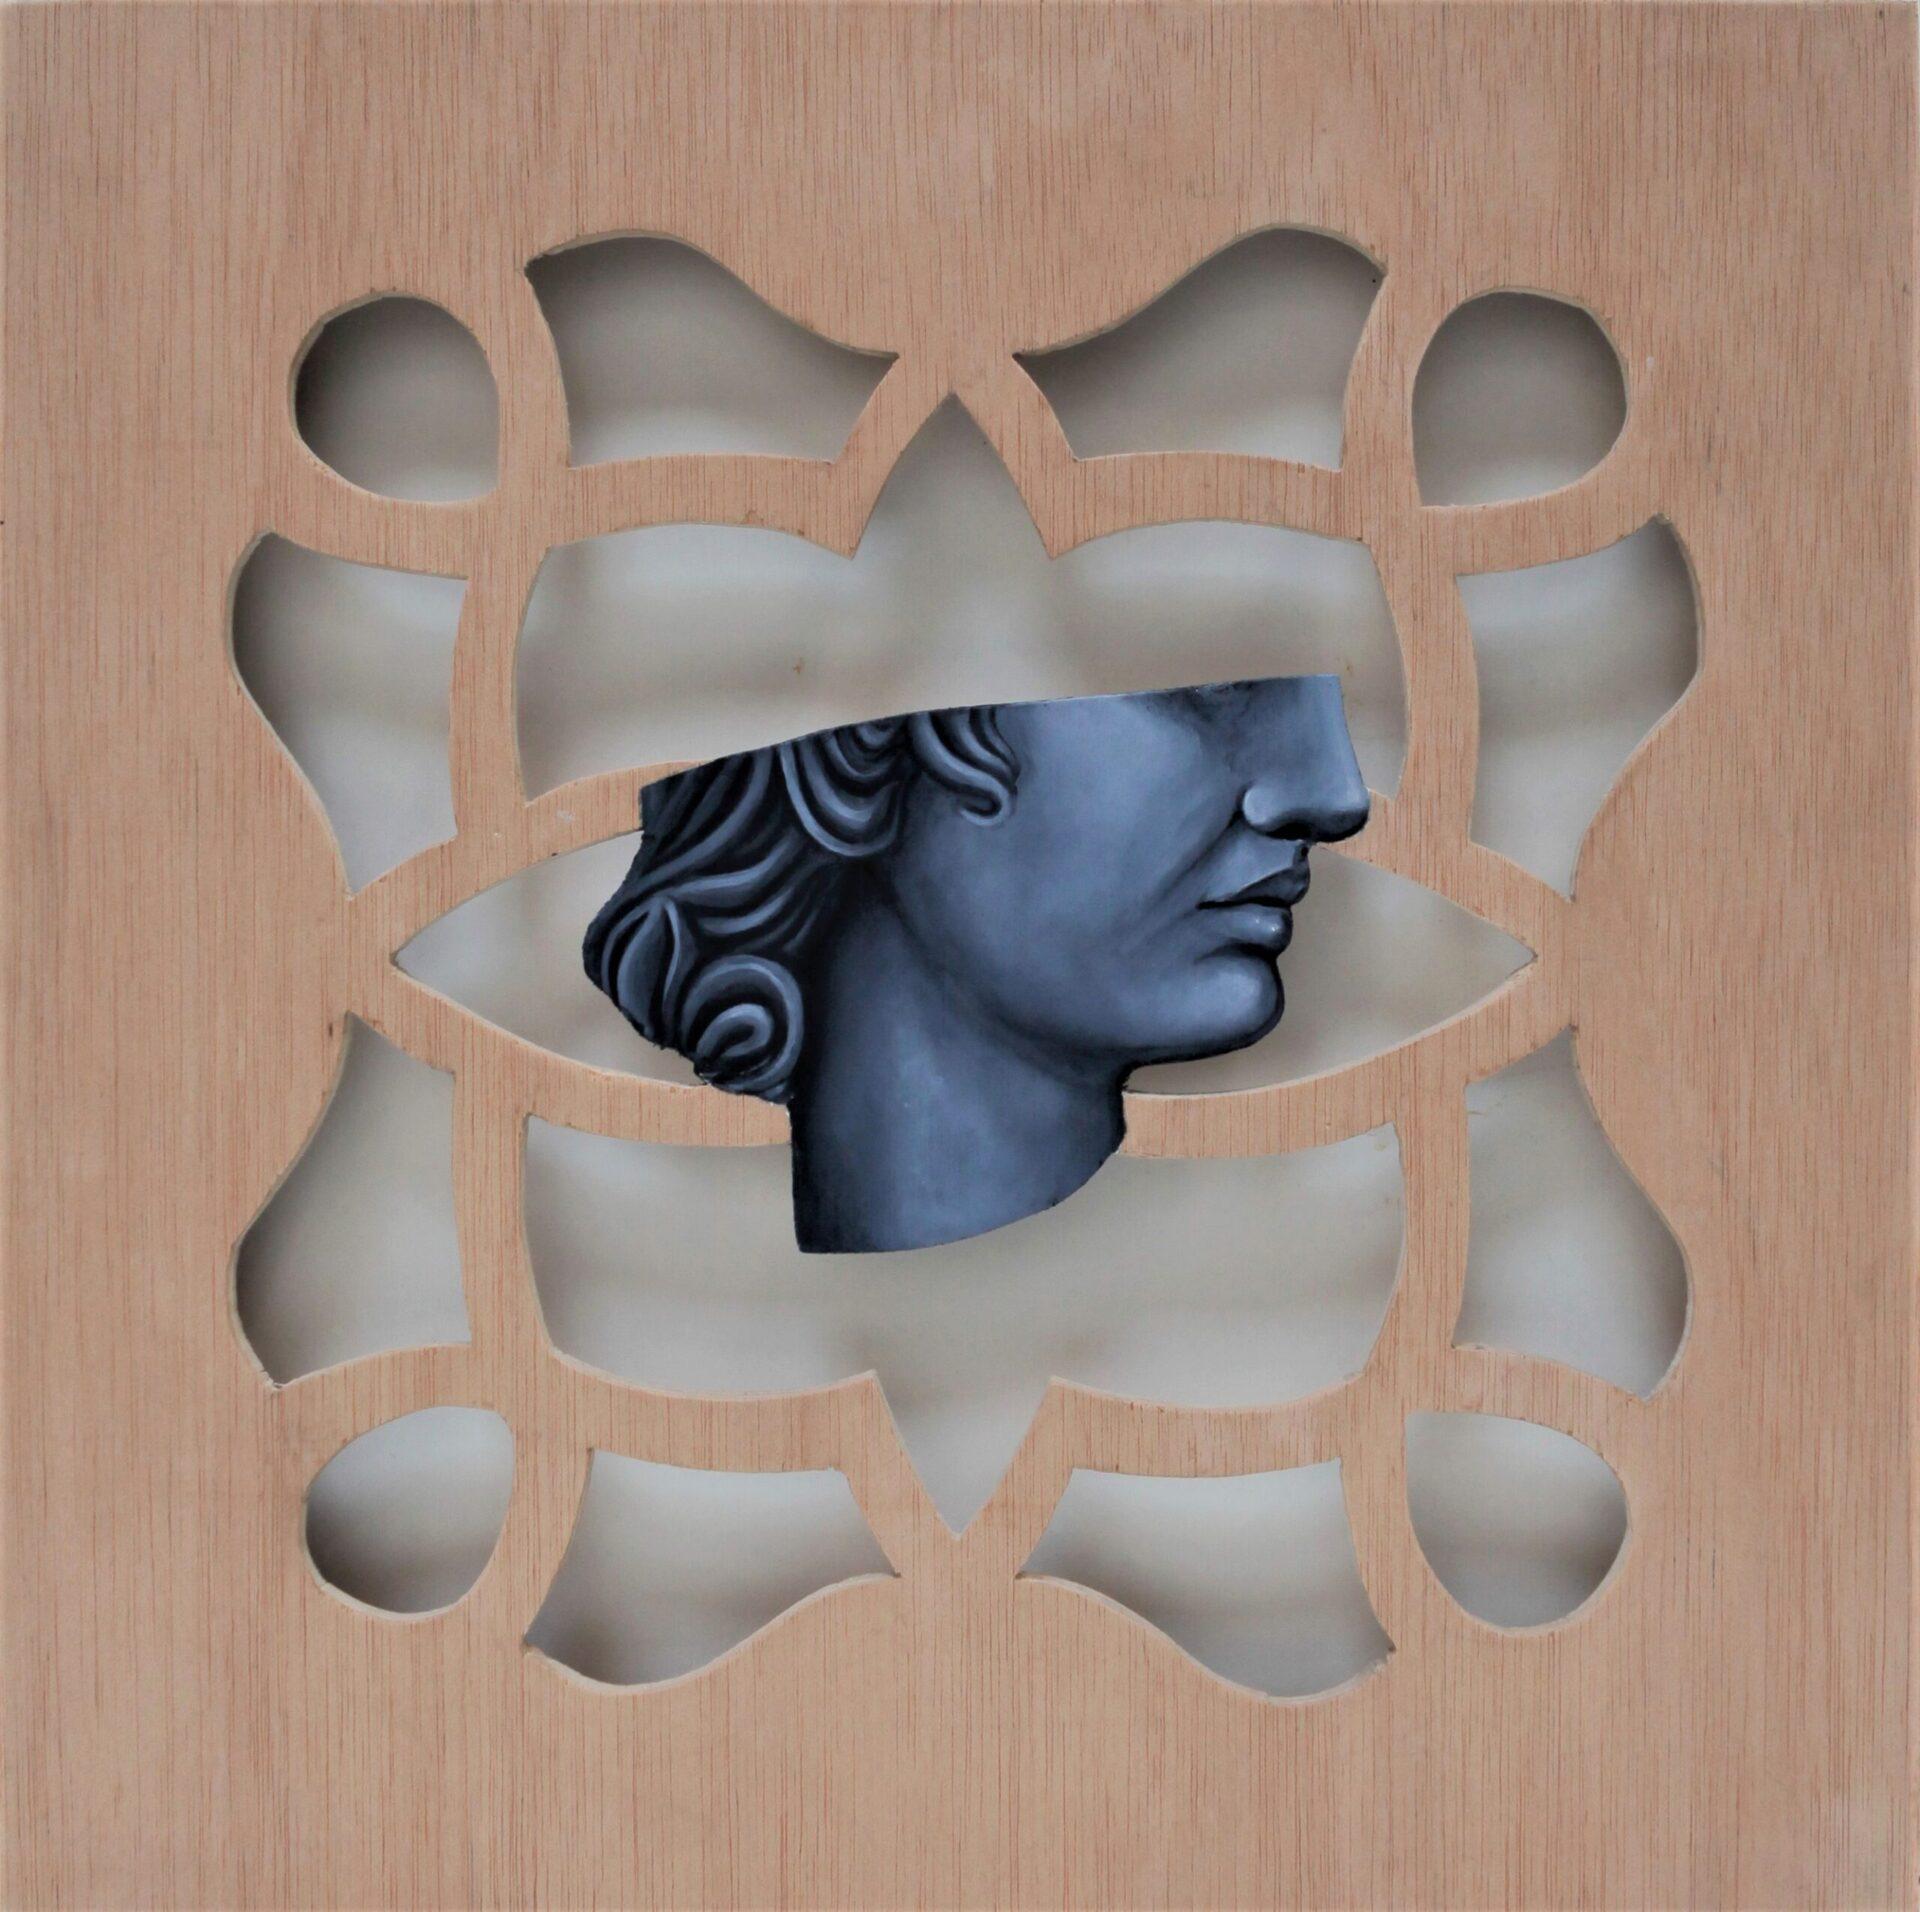 Venus By Jorge Fortea Gallart - Mixed Media Art by Unattributed